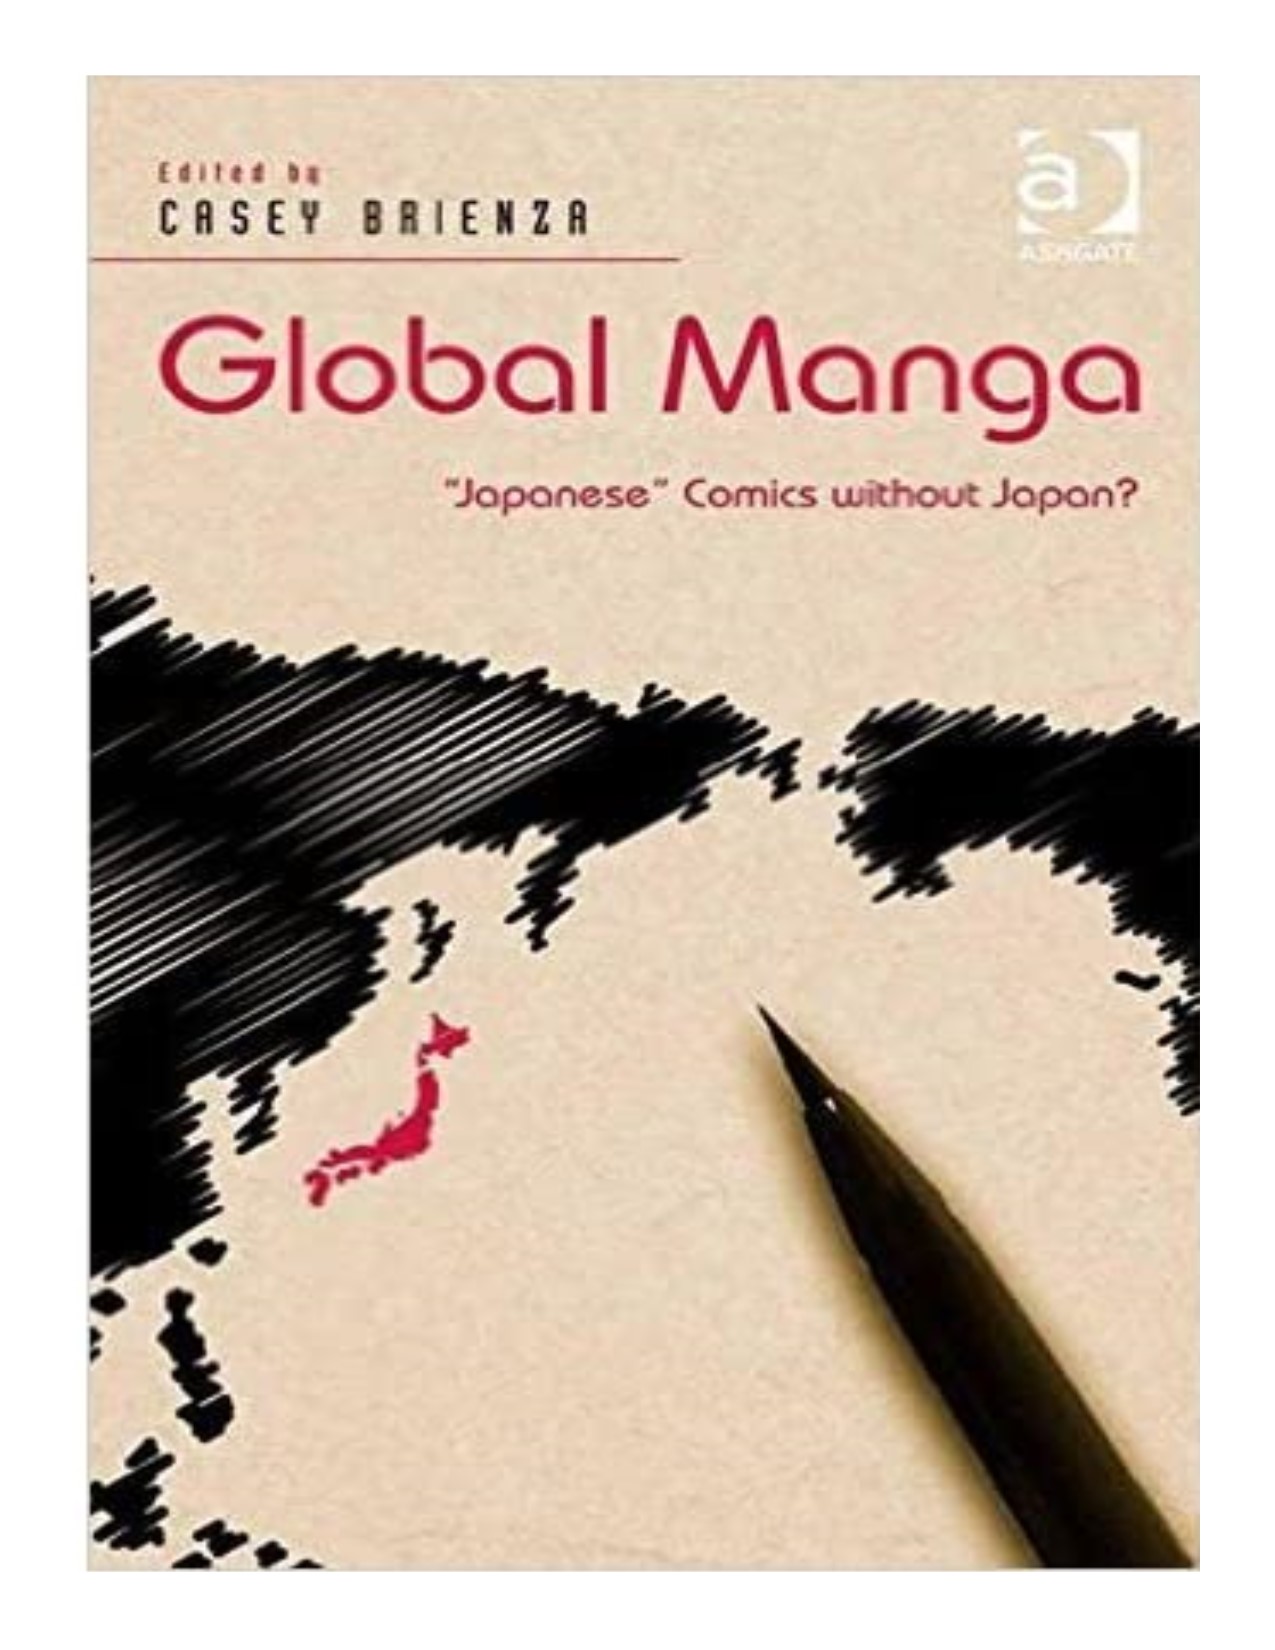 Global Manga "Japanese" comics without Japan?